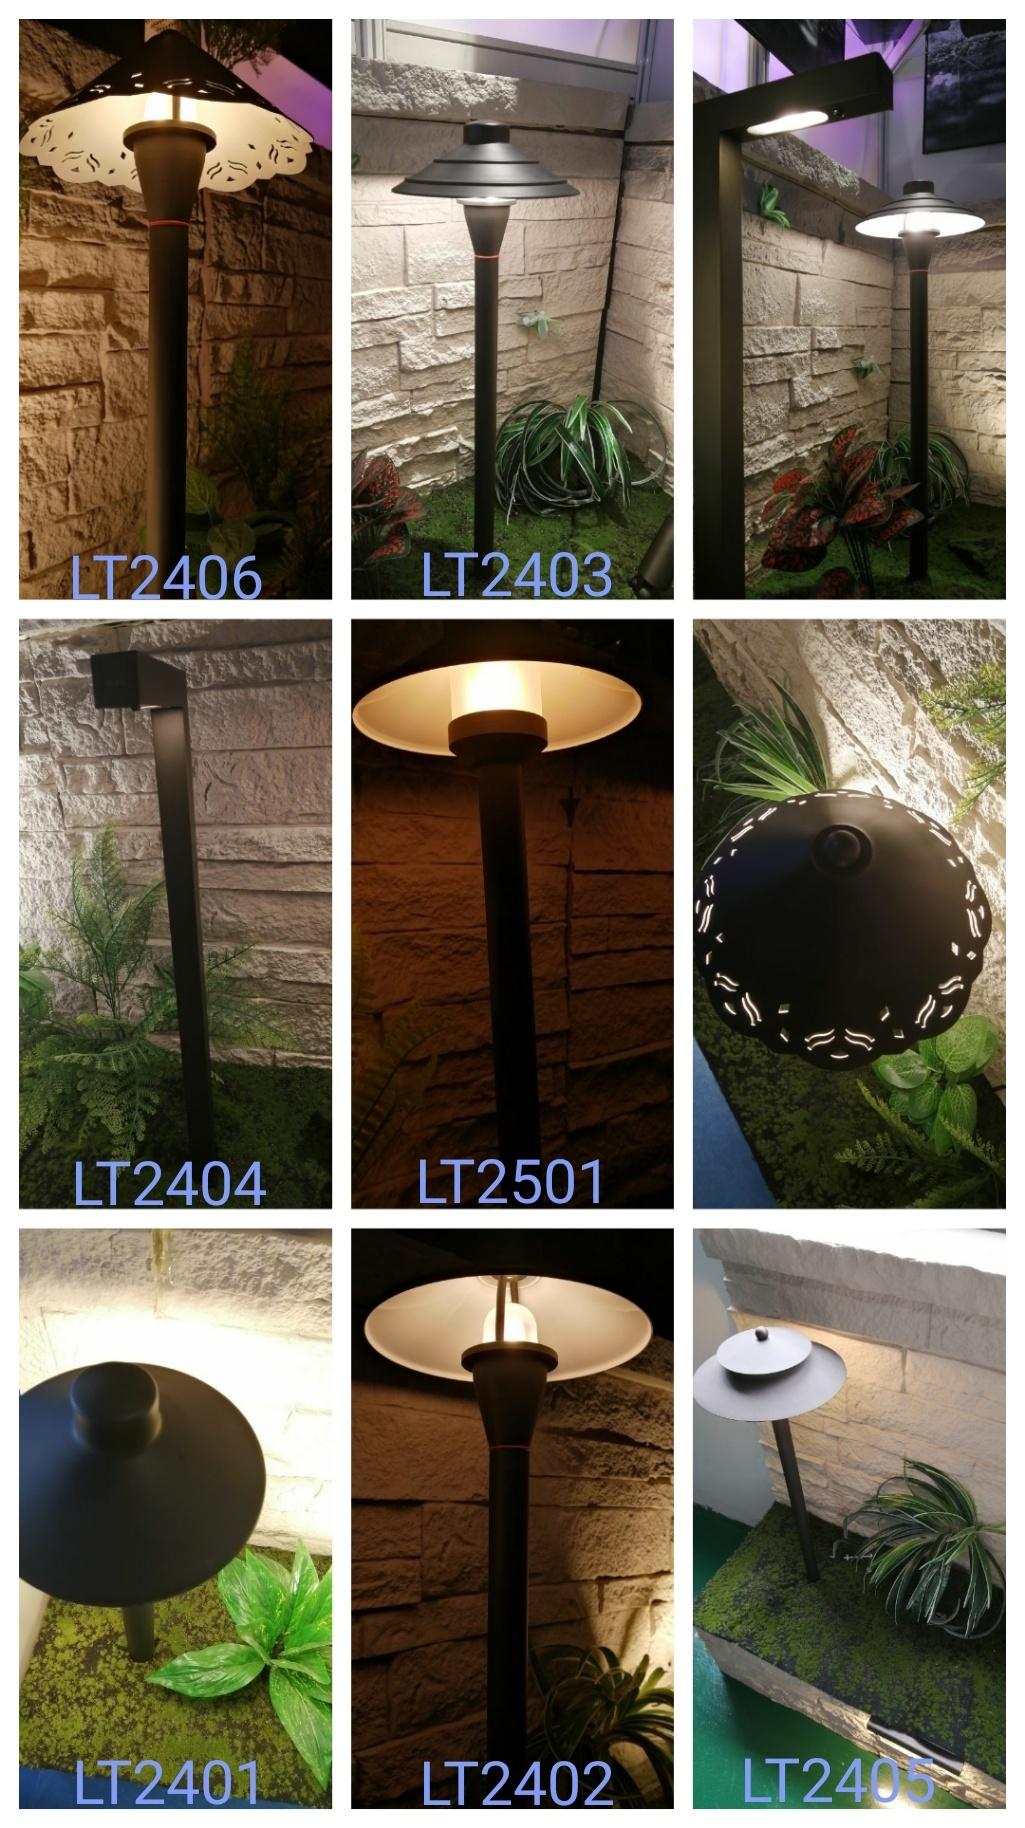 Lt2403 Low Voltage Landscape Lighting Brass Die-Cast Brass Outdoor Pathway Light 4W G4 LED for Yard Walkway Lawn Antique Bronze